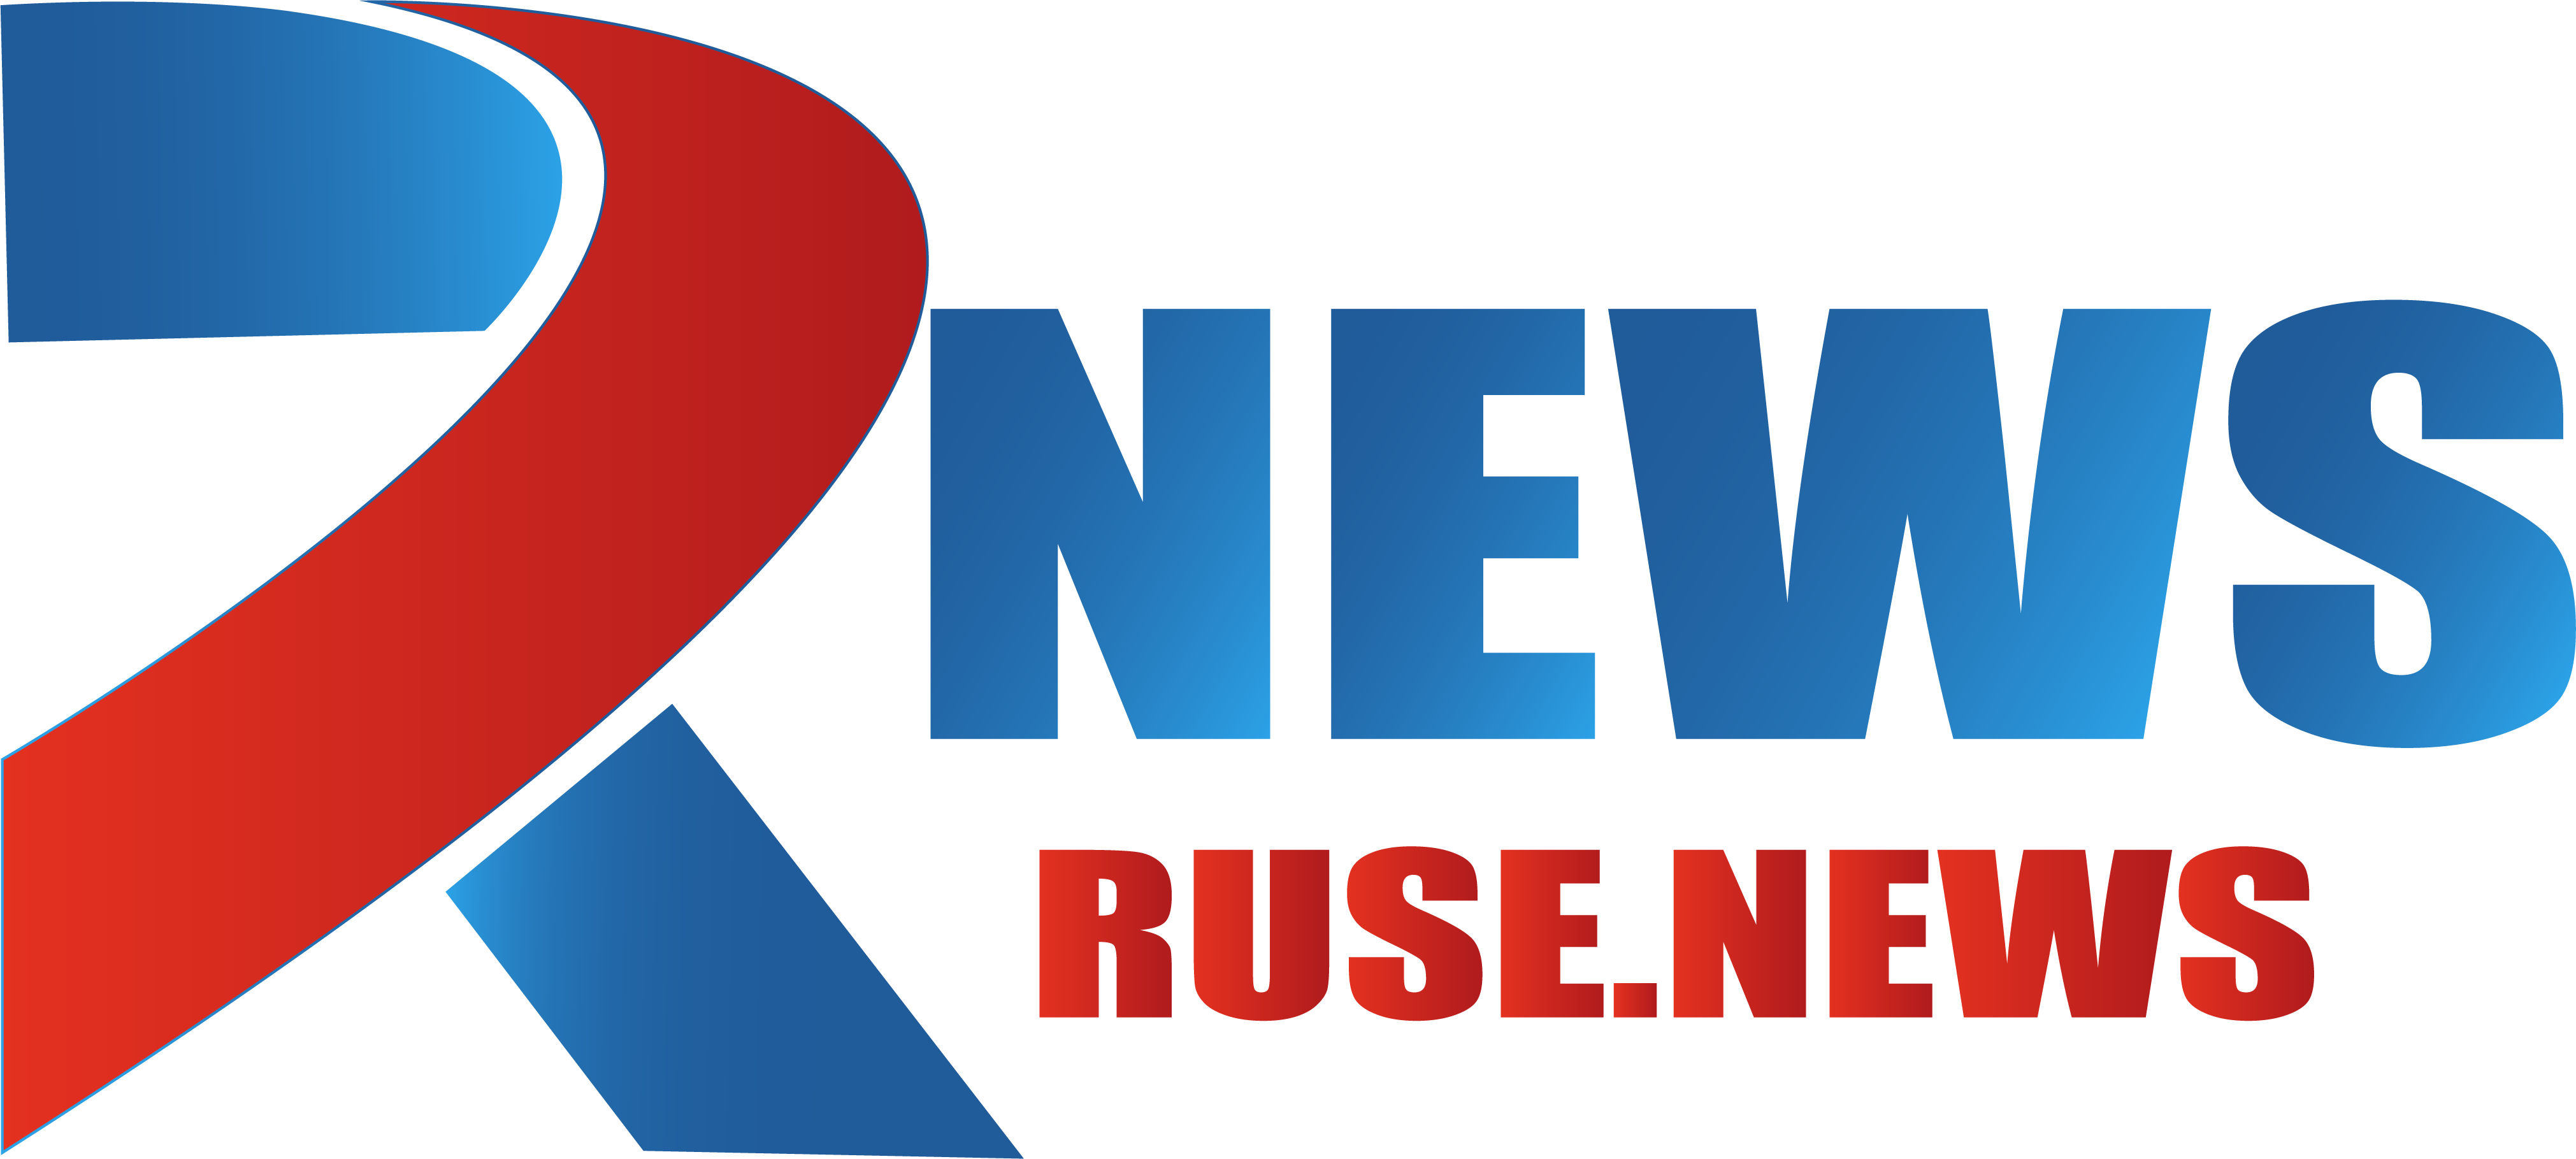 Ruse news - Новини от Русе и региона